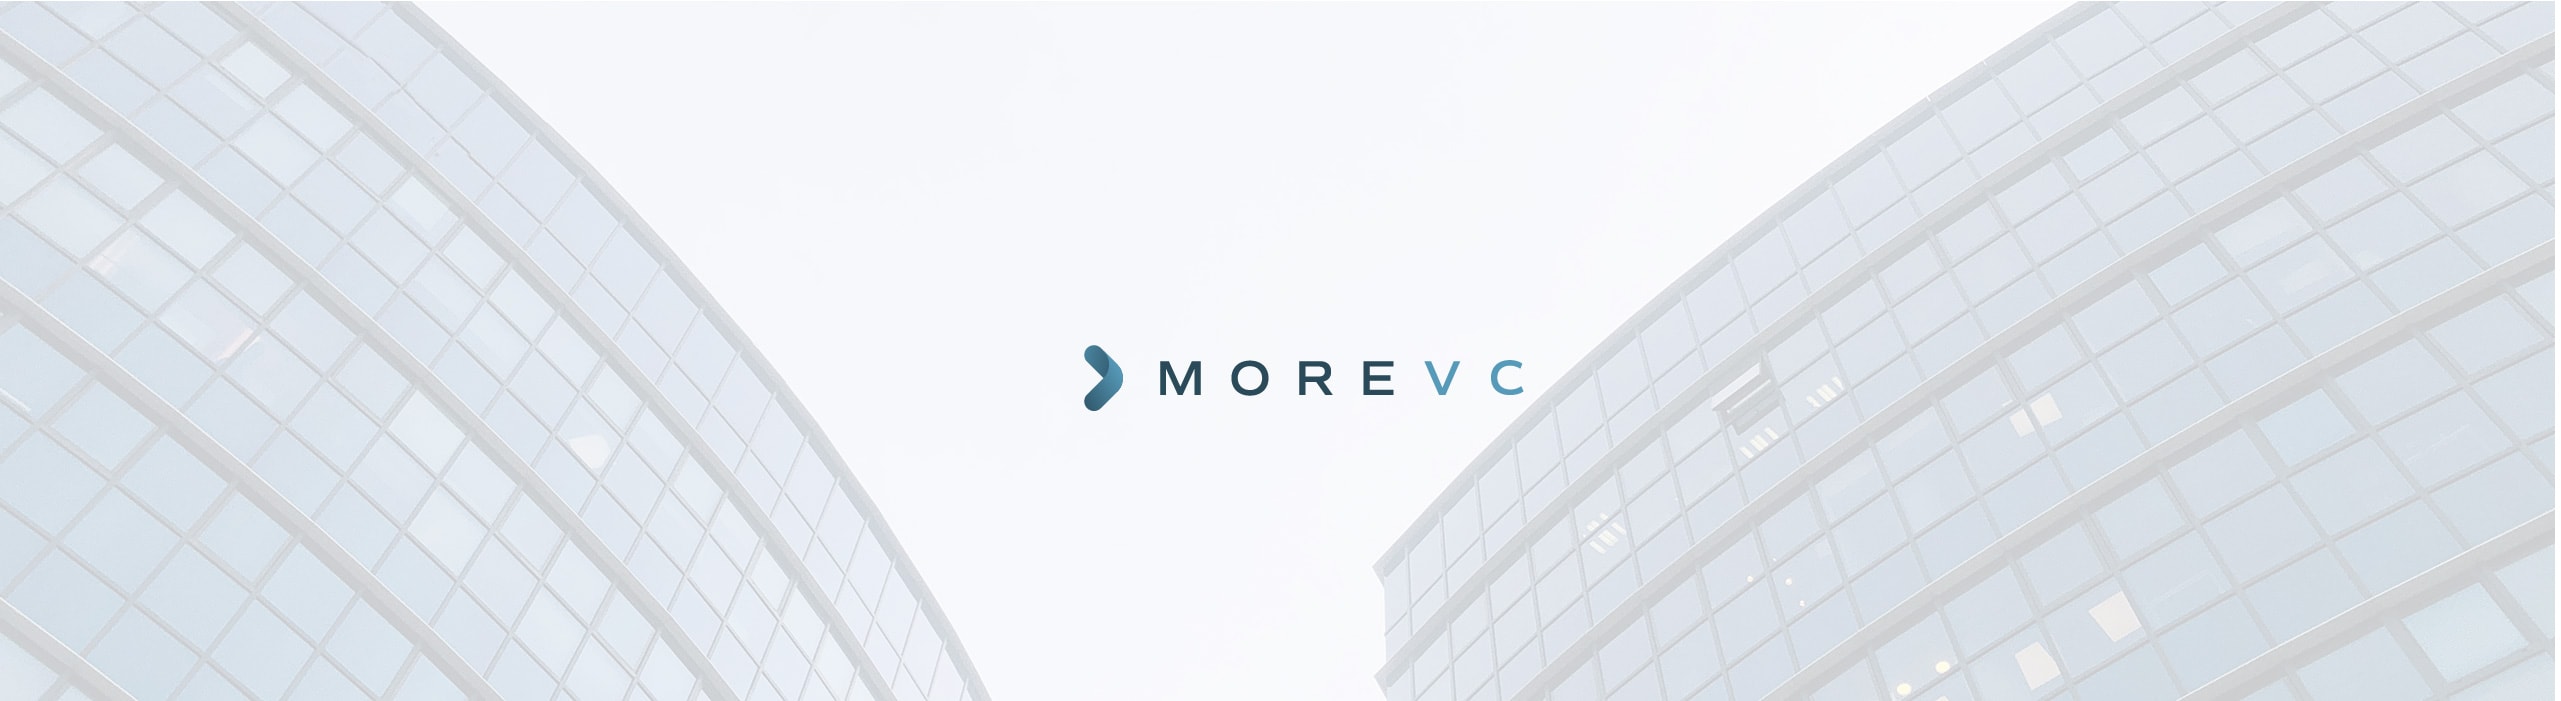 MoreVC - More_natie page_1-02 - Natie Branding Agency